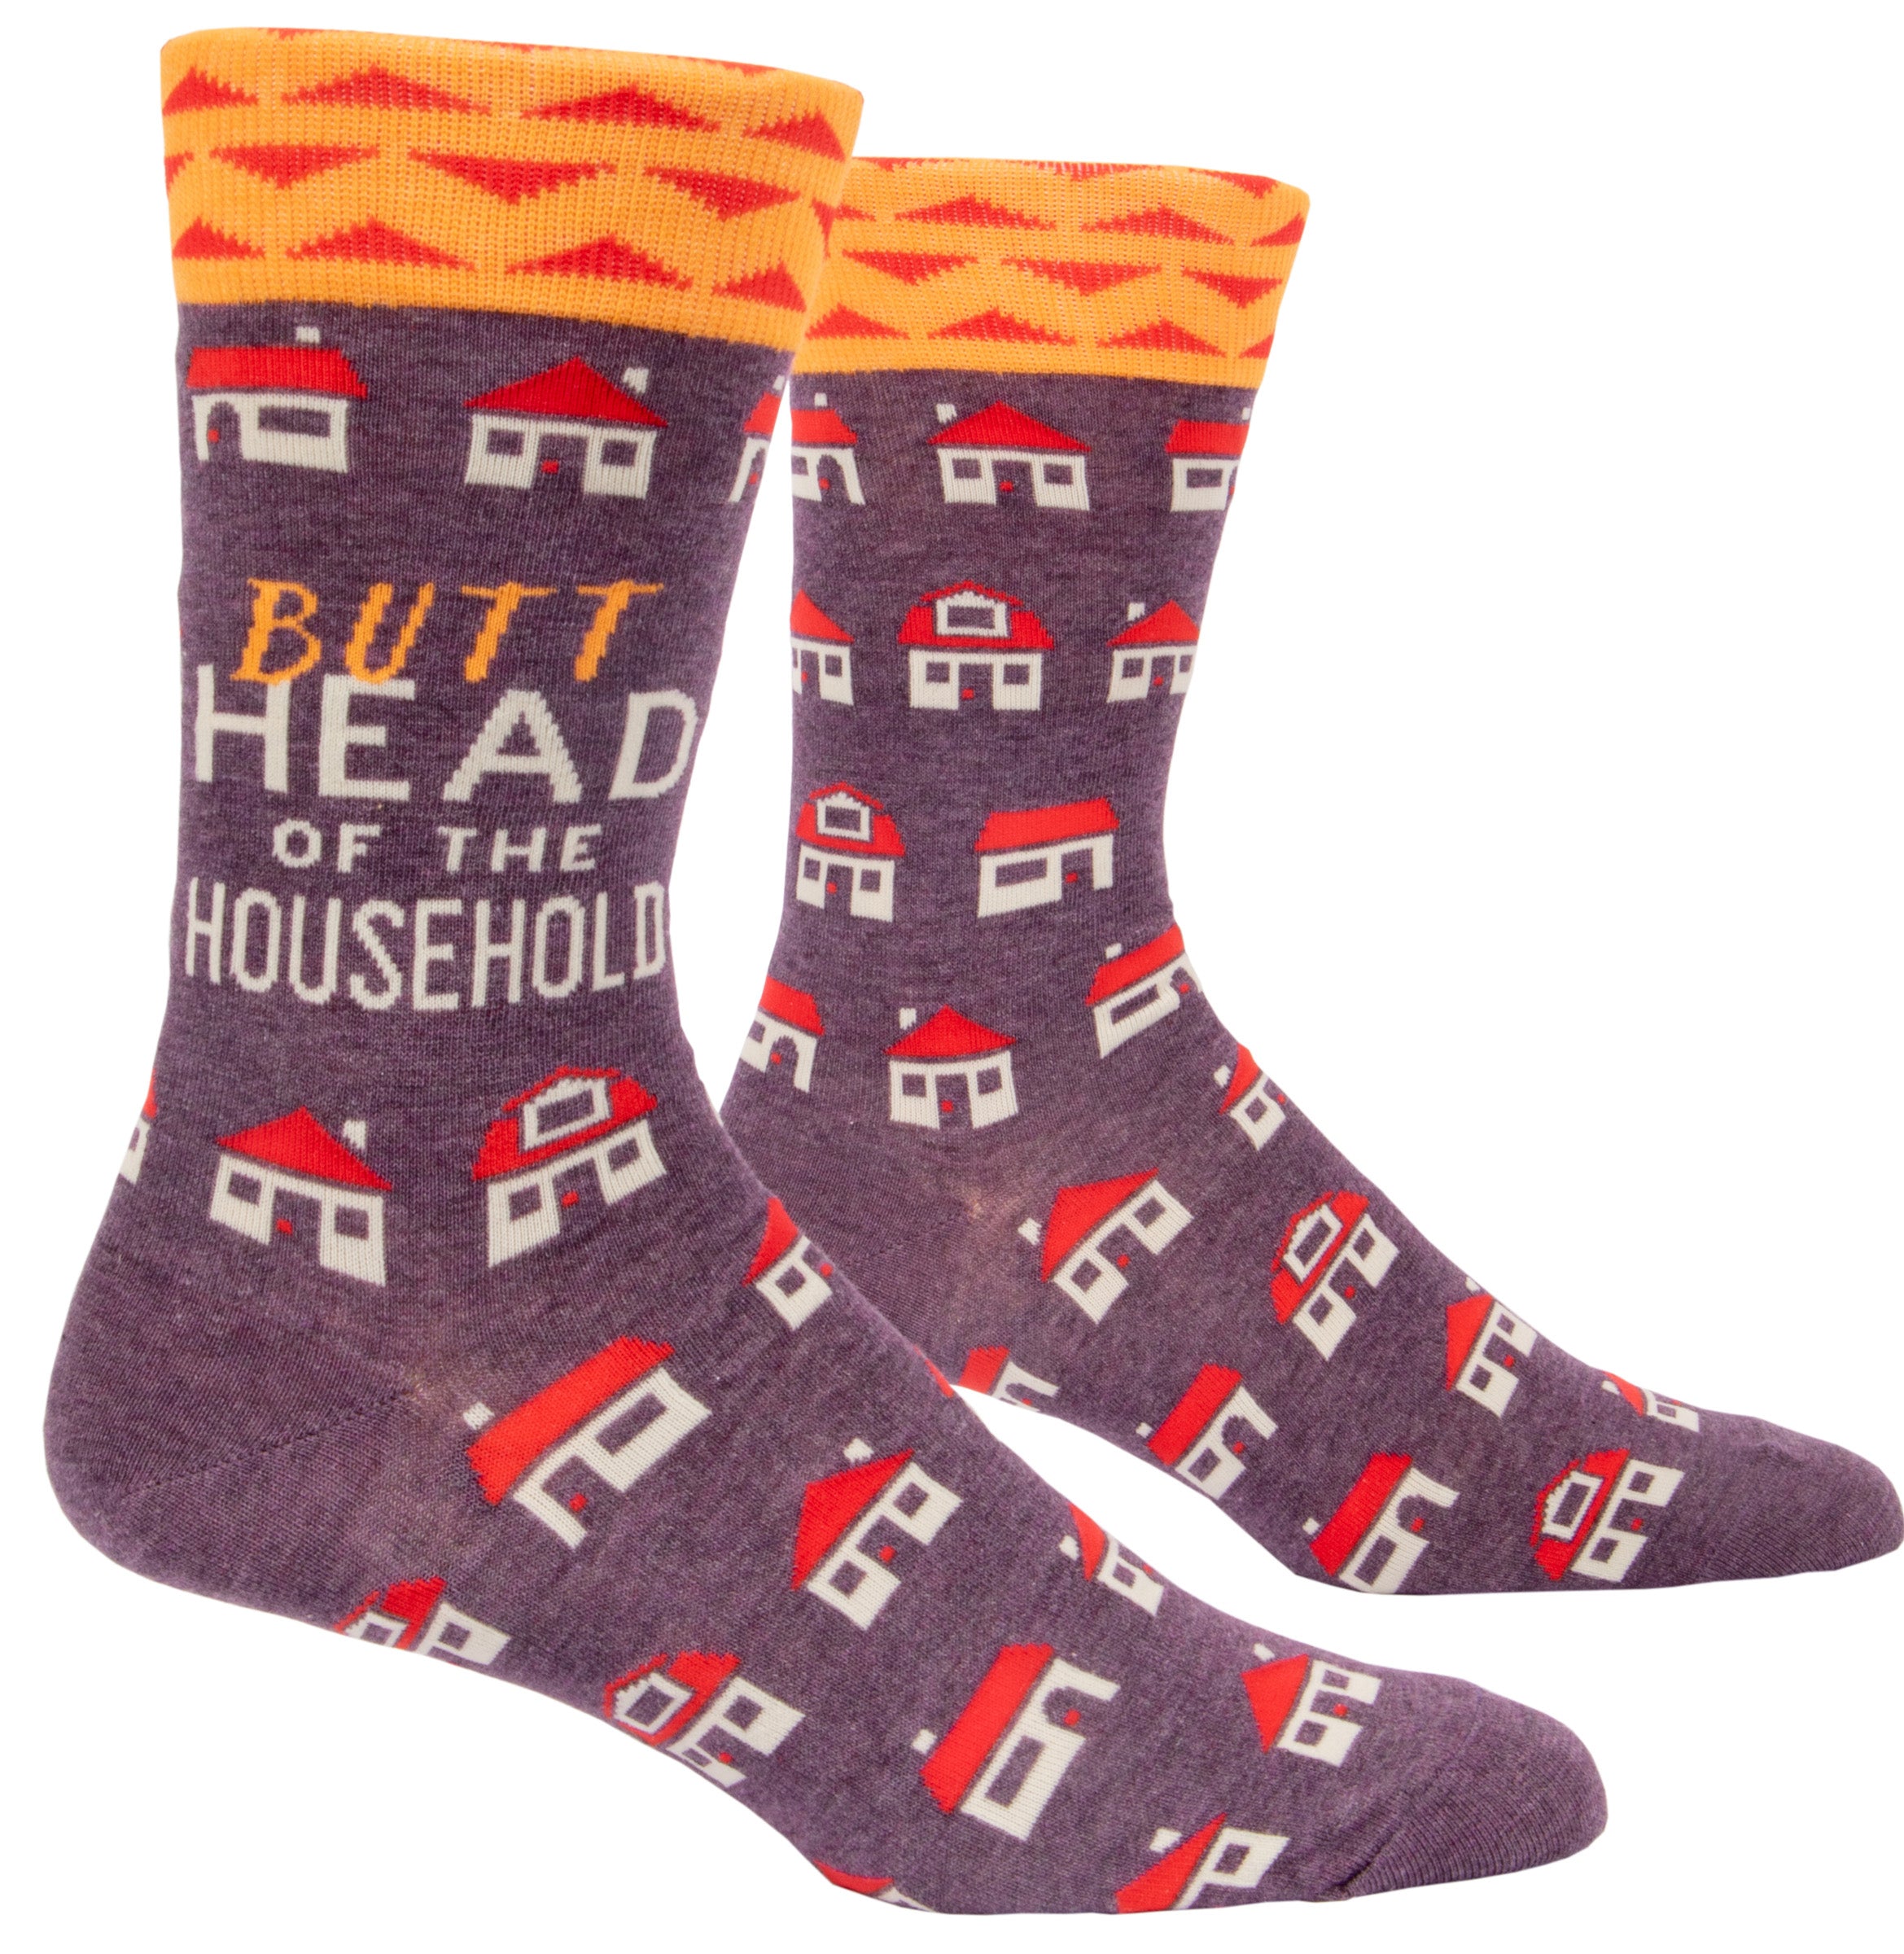 Socken Männer: Butthead household